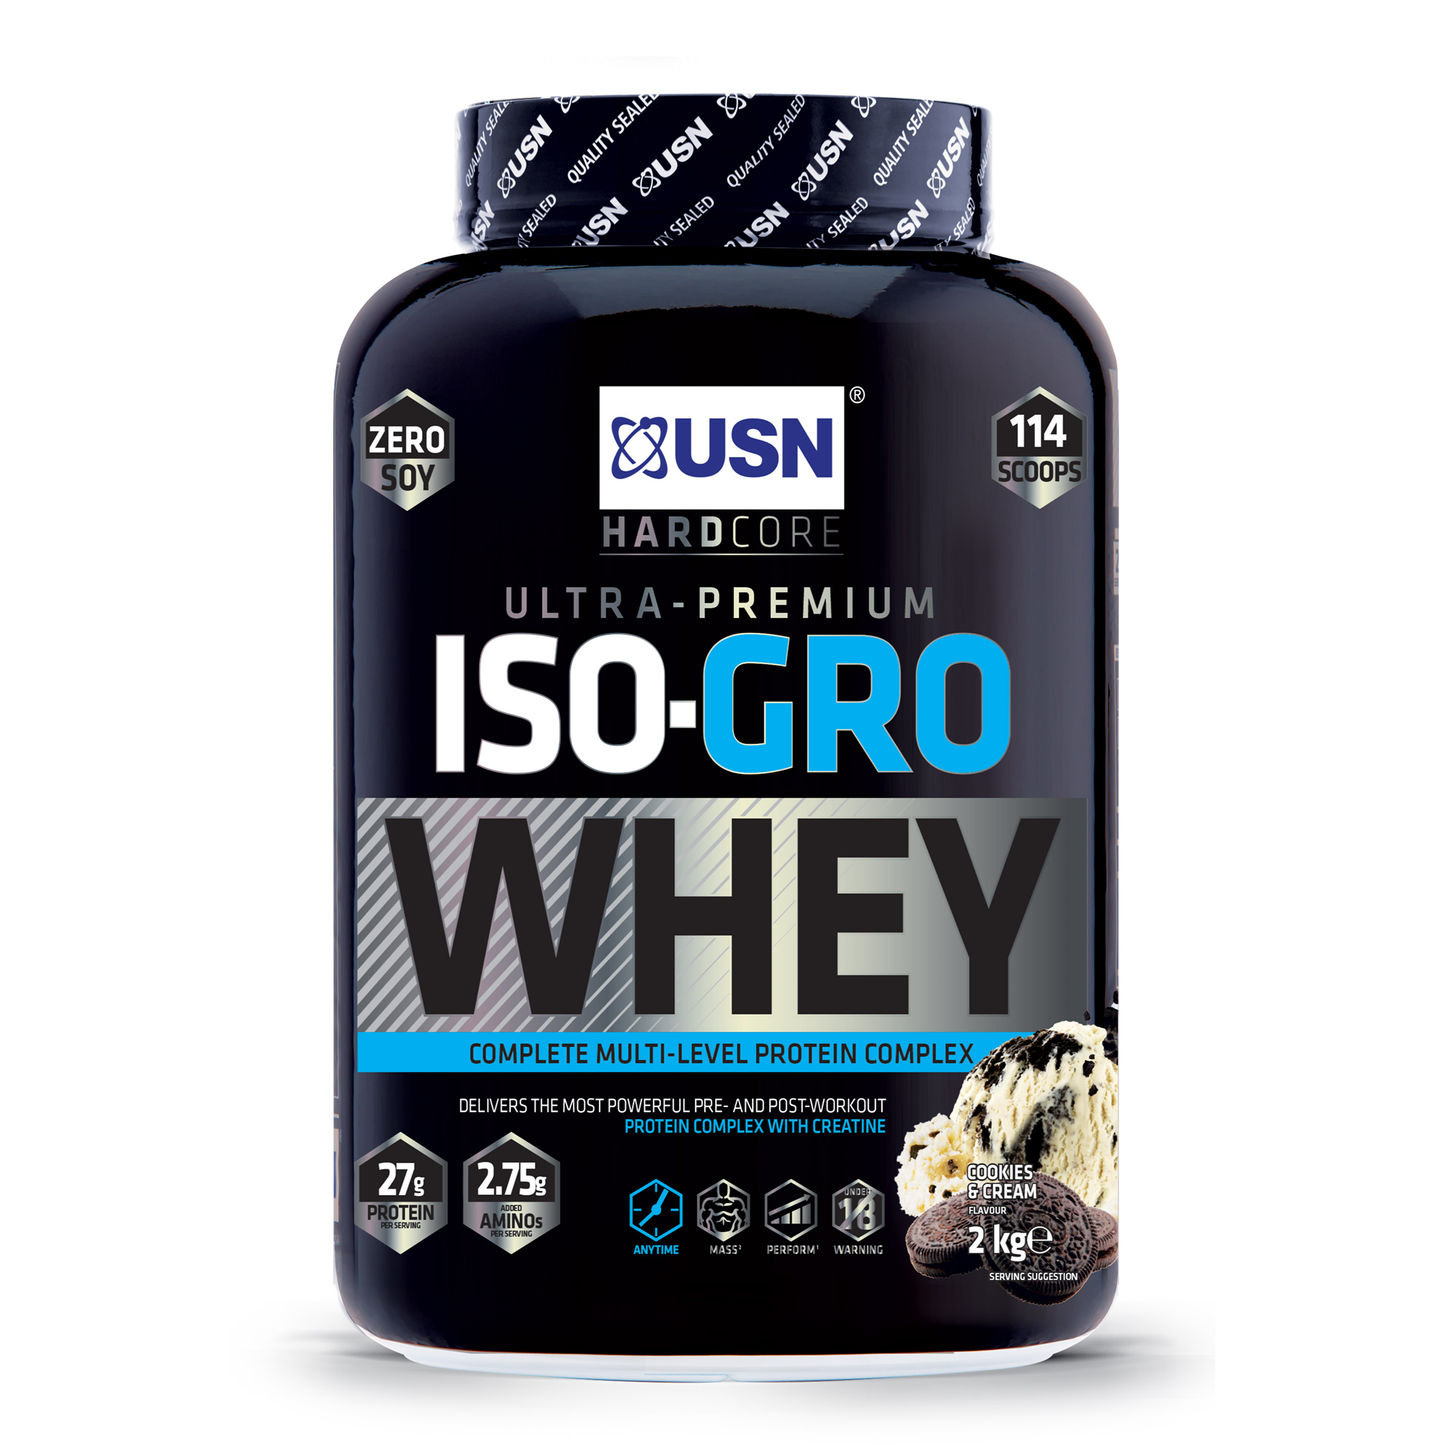 ISO-GRO Whey Isolate Protein Powder